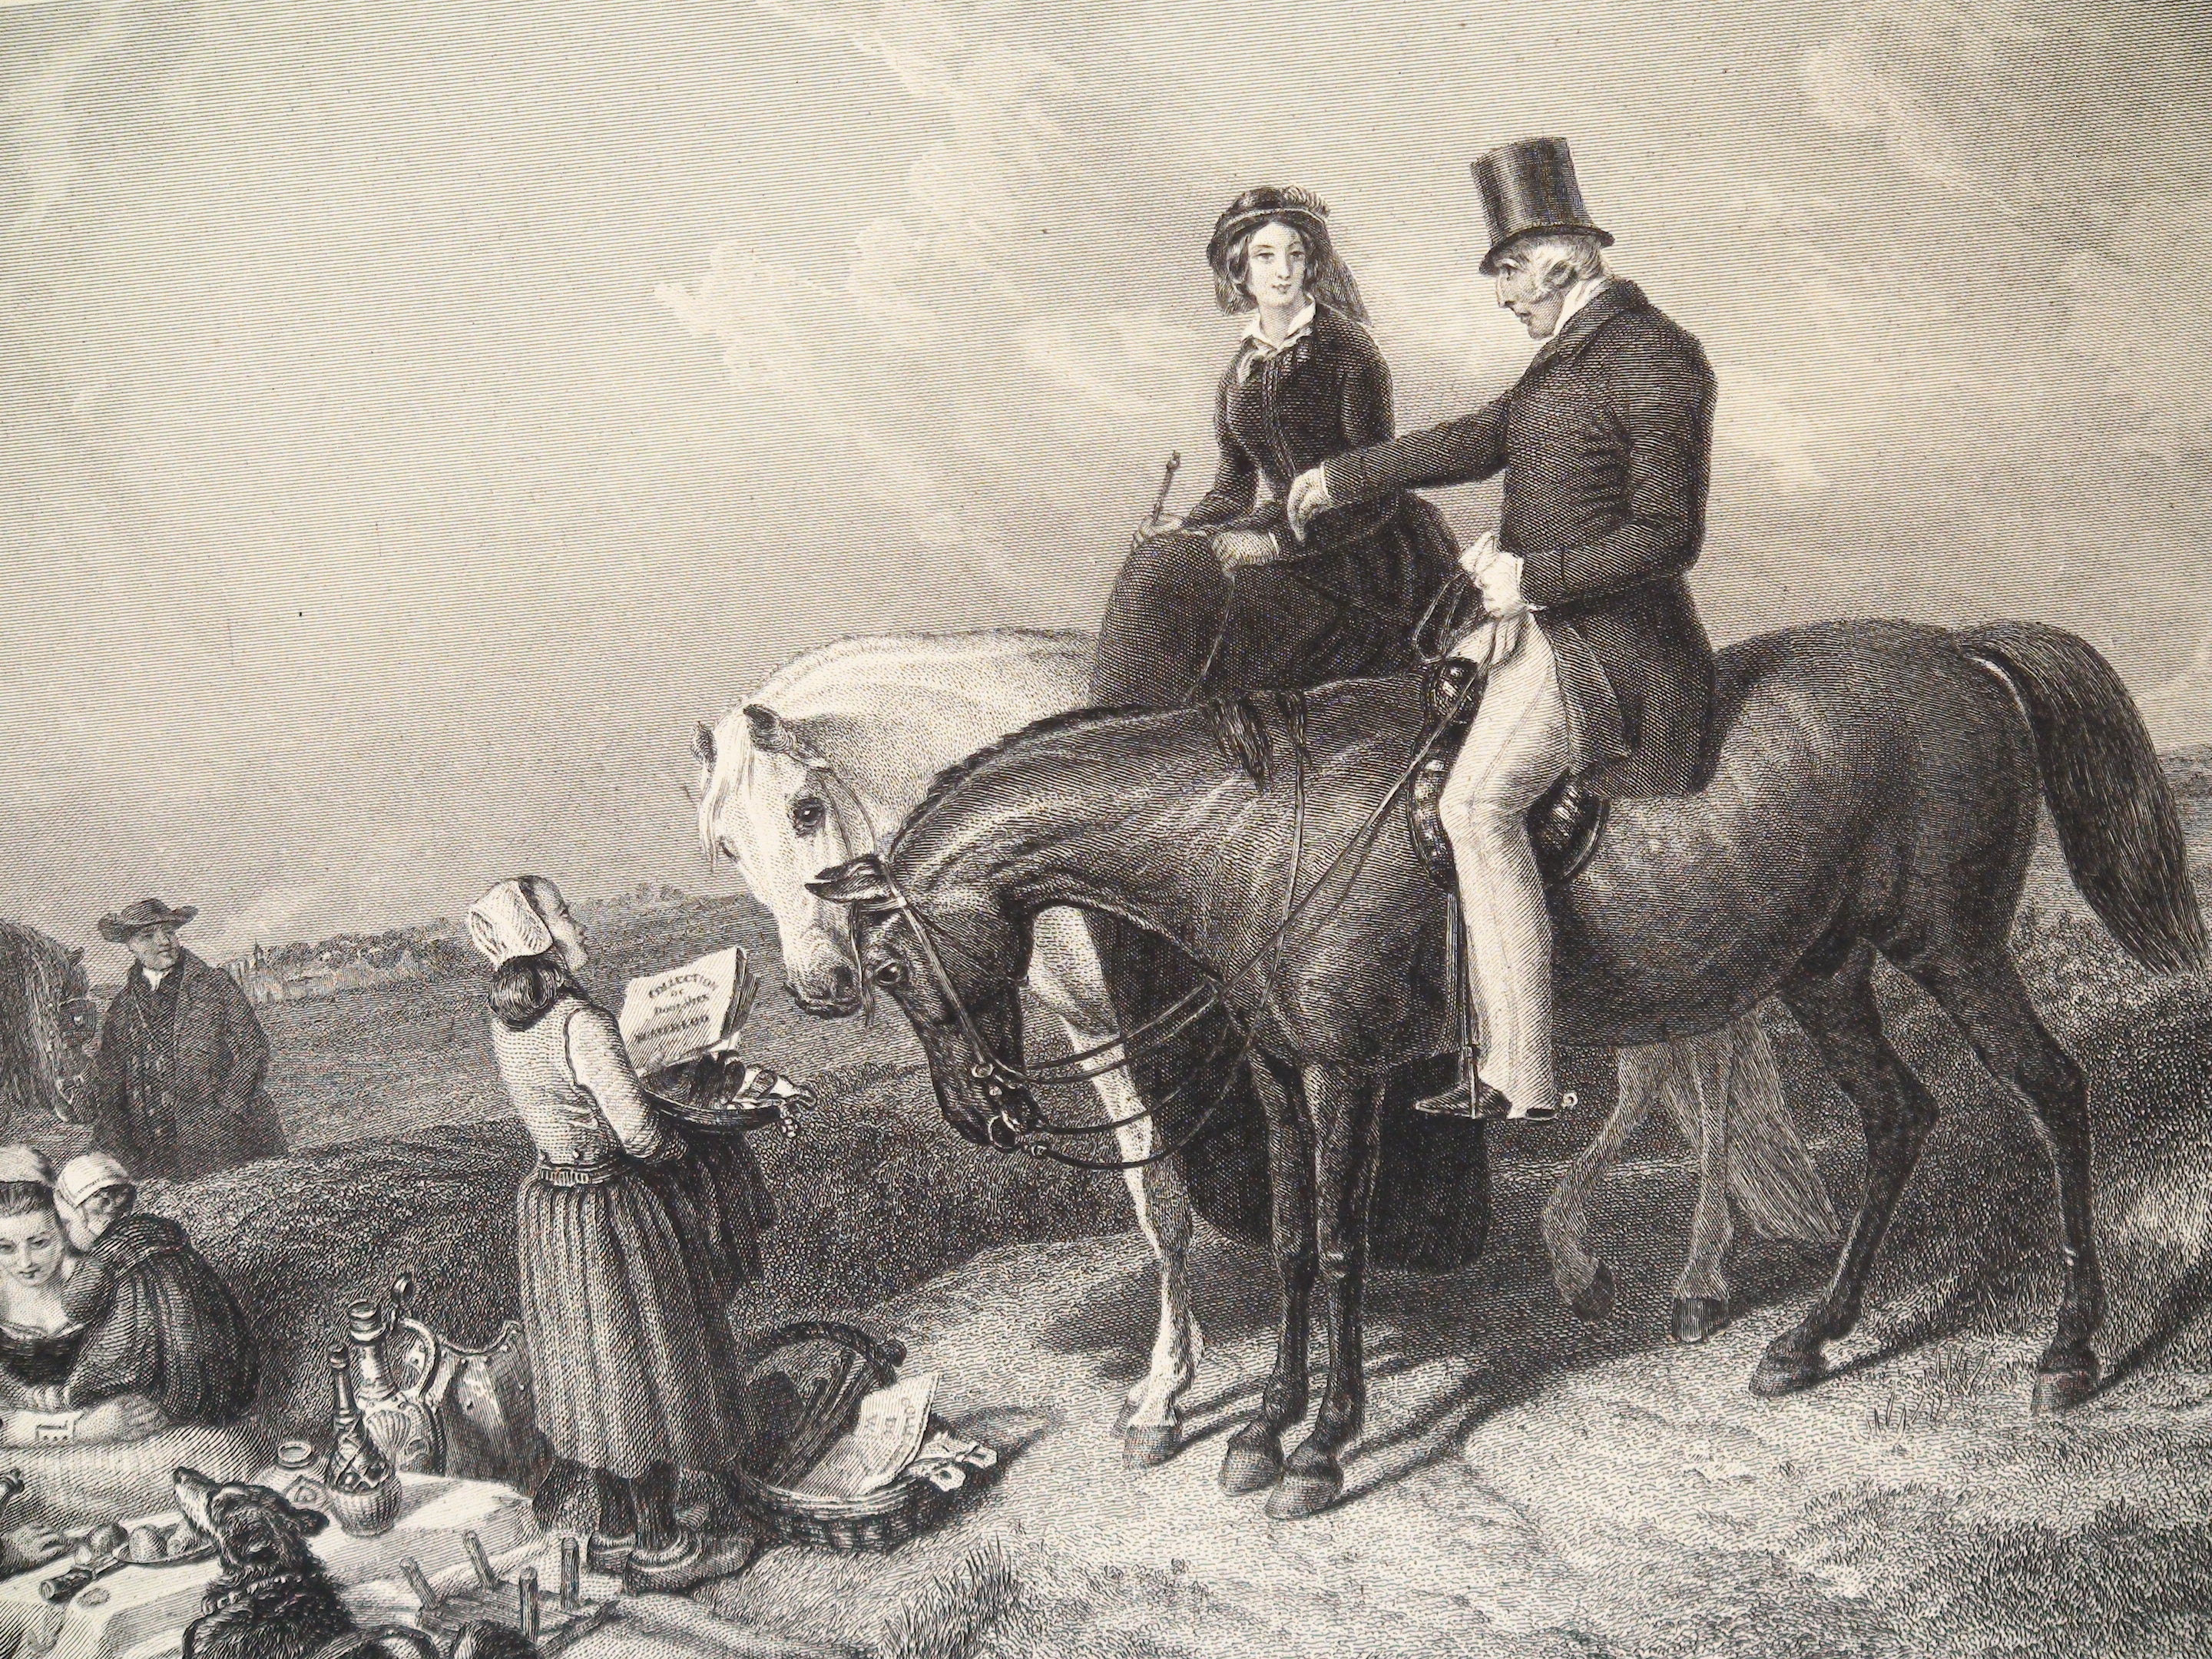 A Dialogue at Waterloo, Edwin Henry Landseer, Vintage Print, 1860s